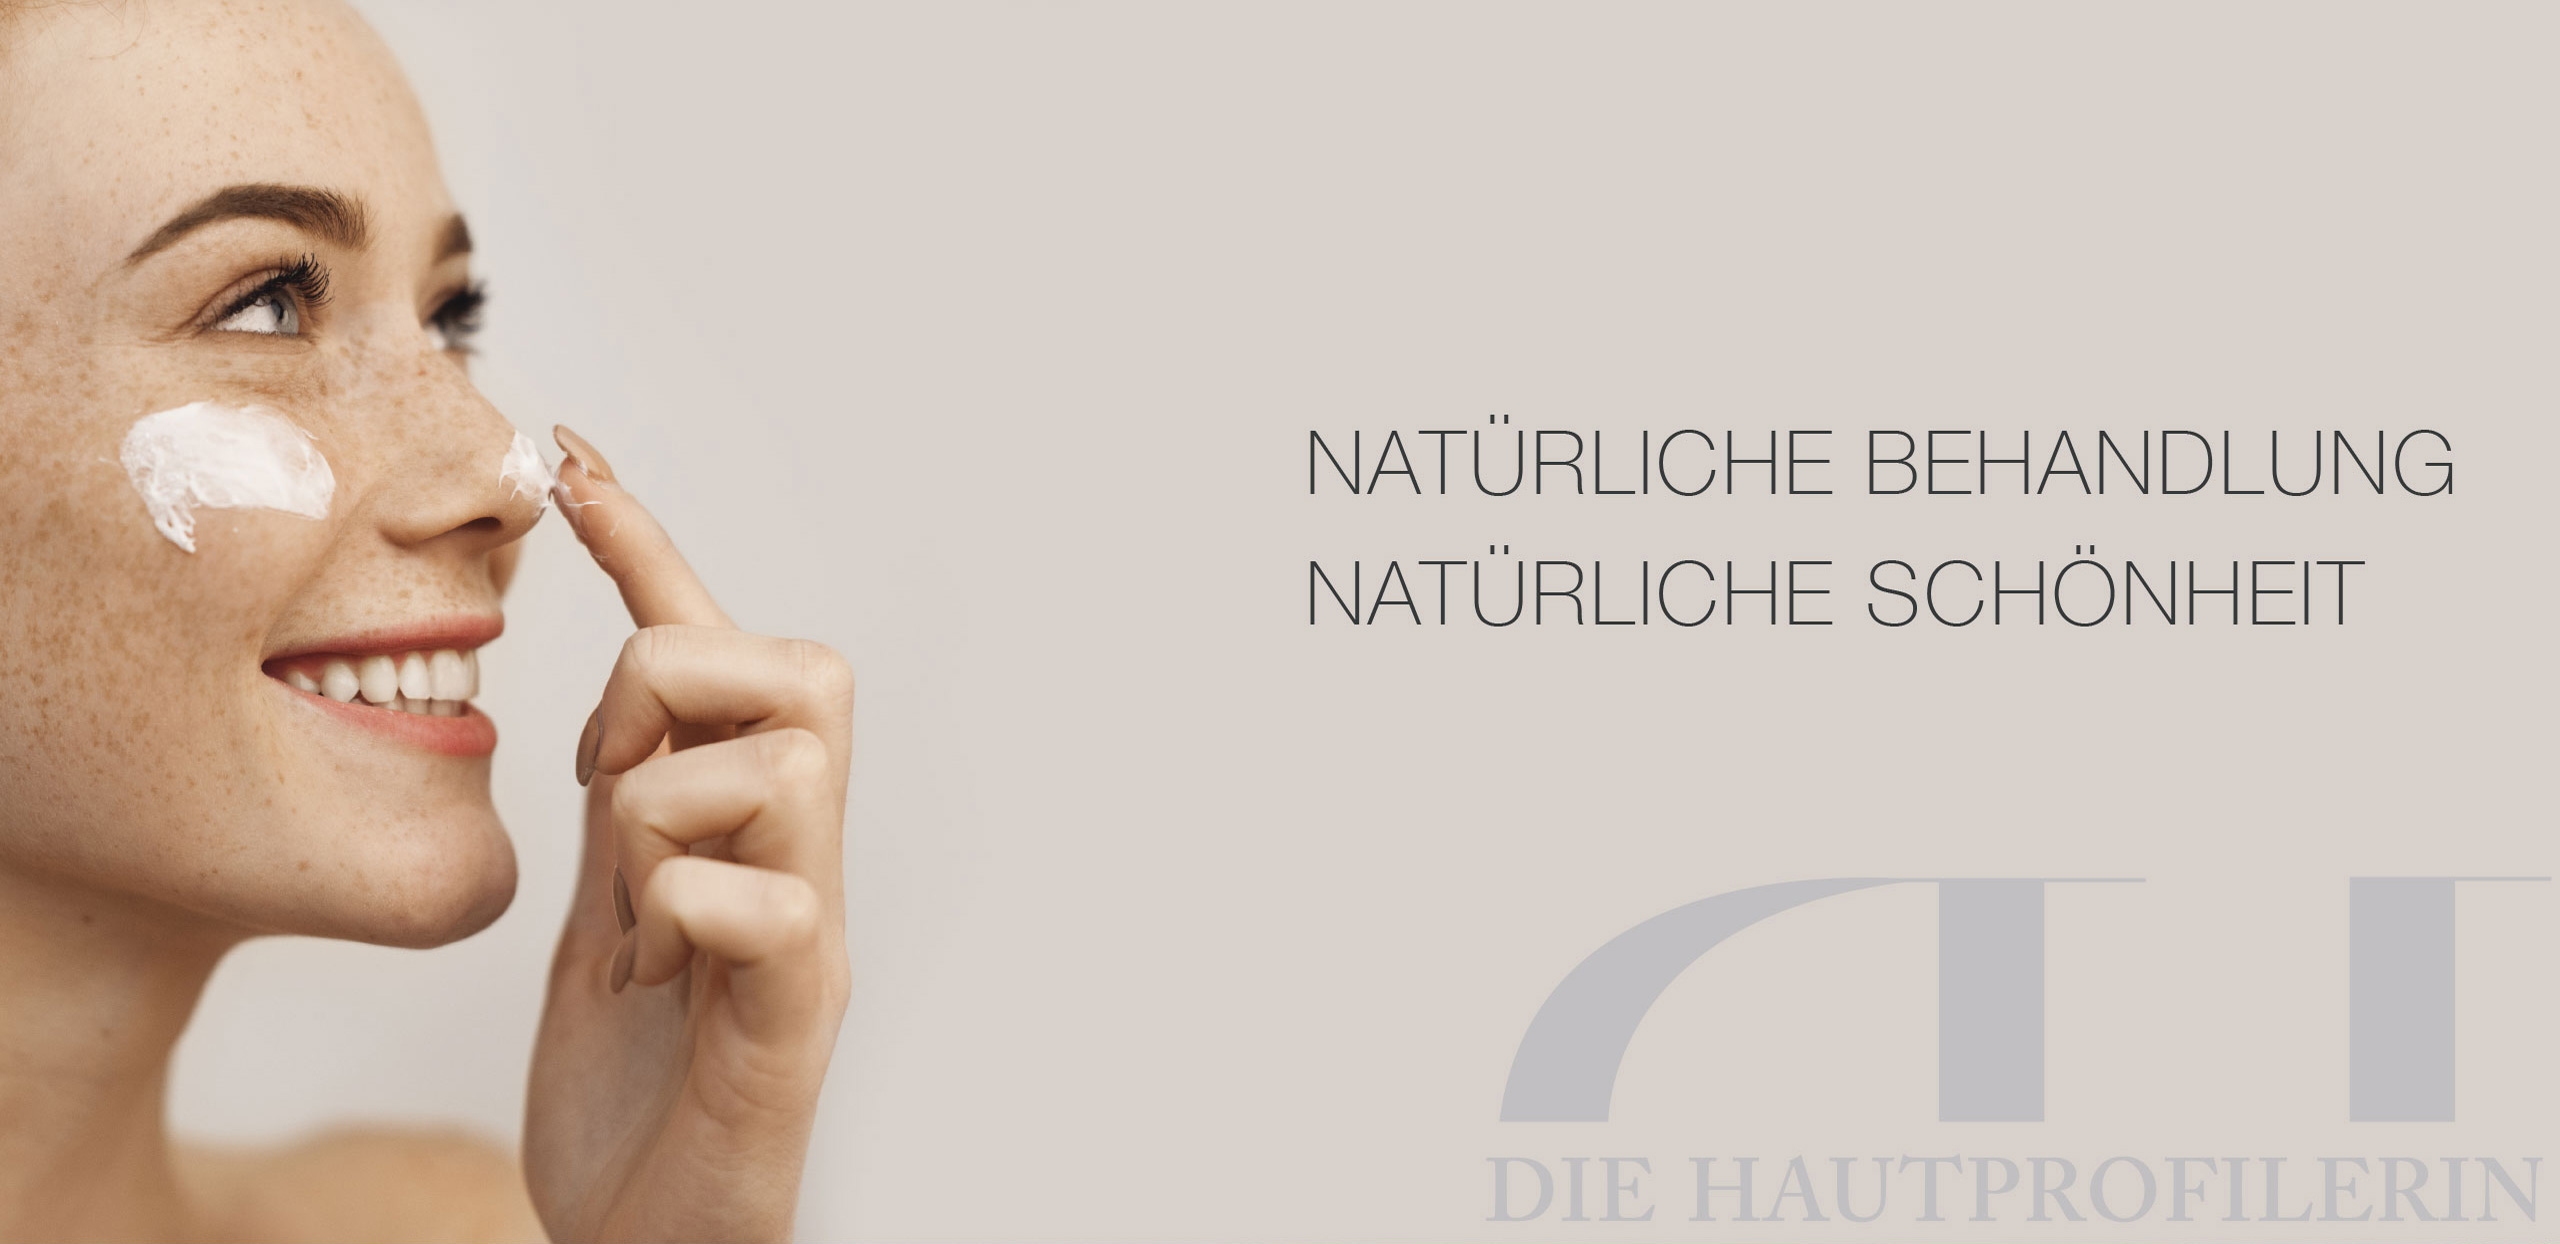 Daniela Heider - success 4 your skin Hautprofilerin, Fachkosmetikerin, Fußpflegerin, Make-up Artist, Hairstylistin